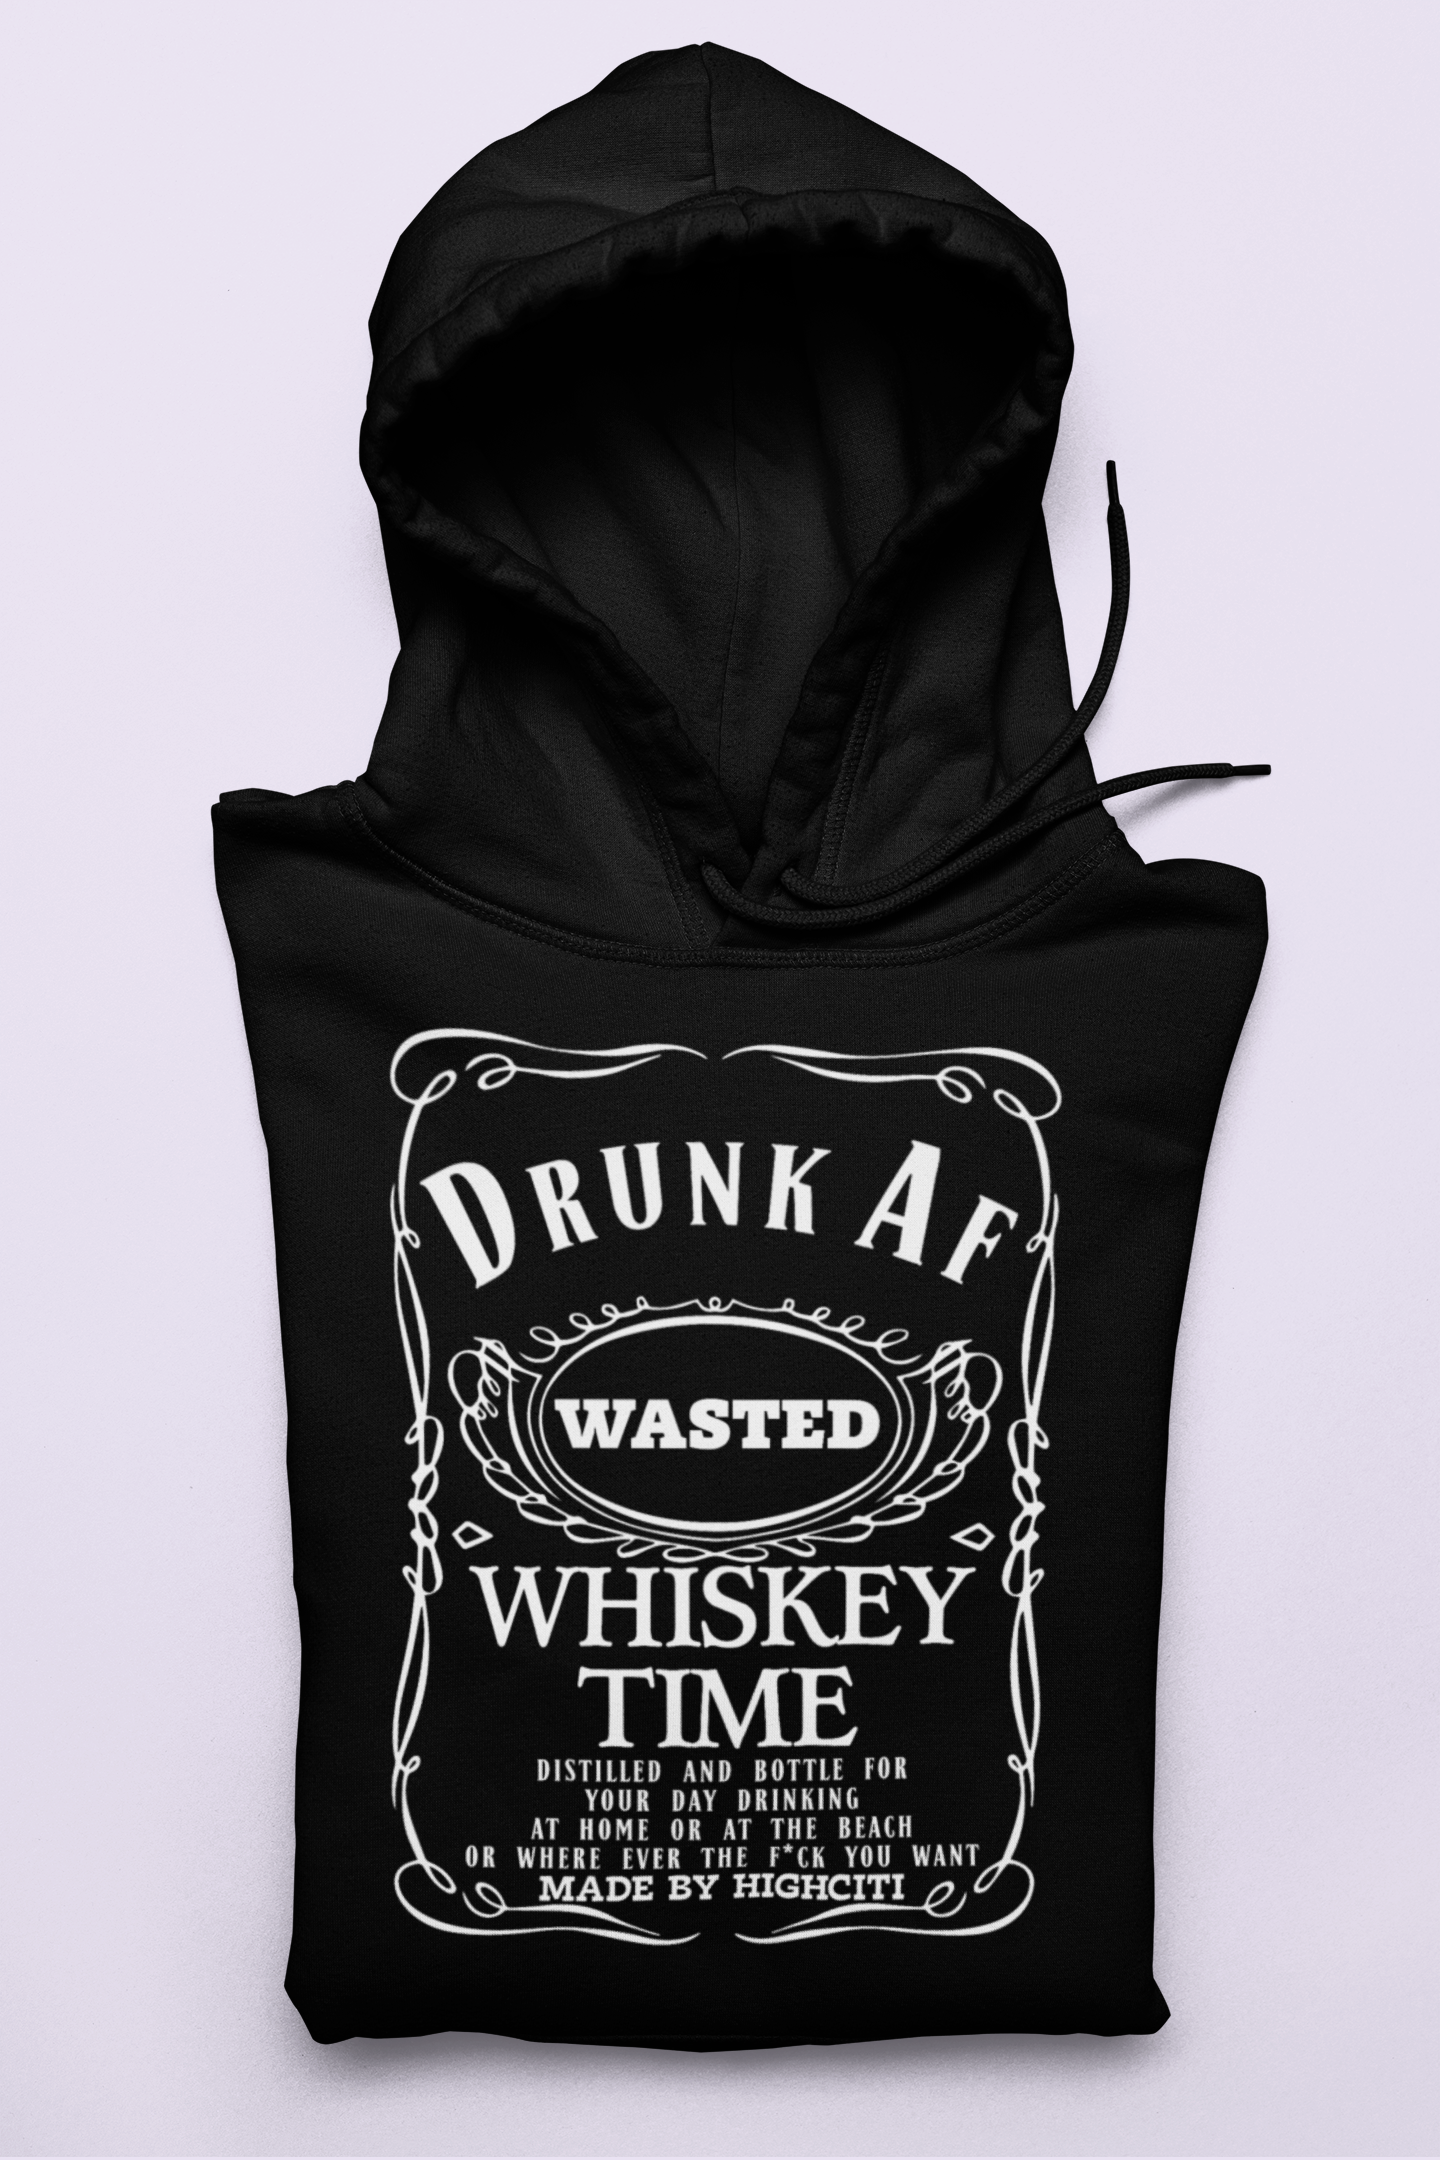 Black hoodie saying drunk af wasted whiskey time - HighCiti